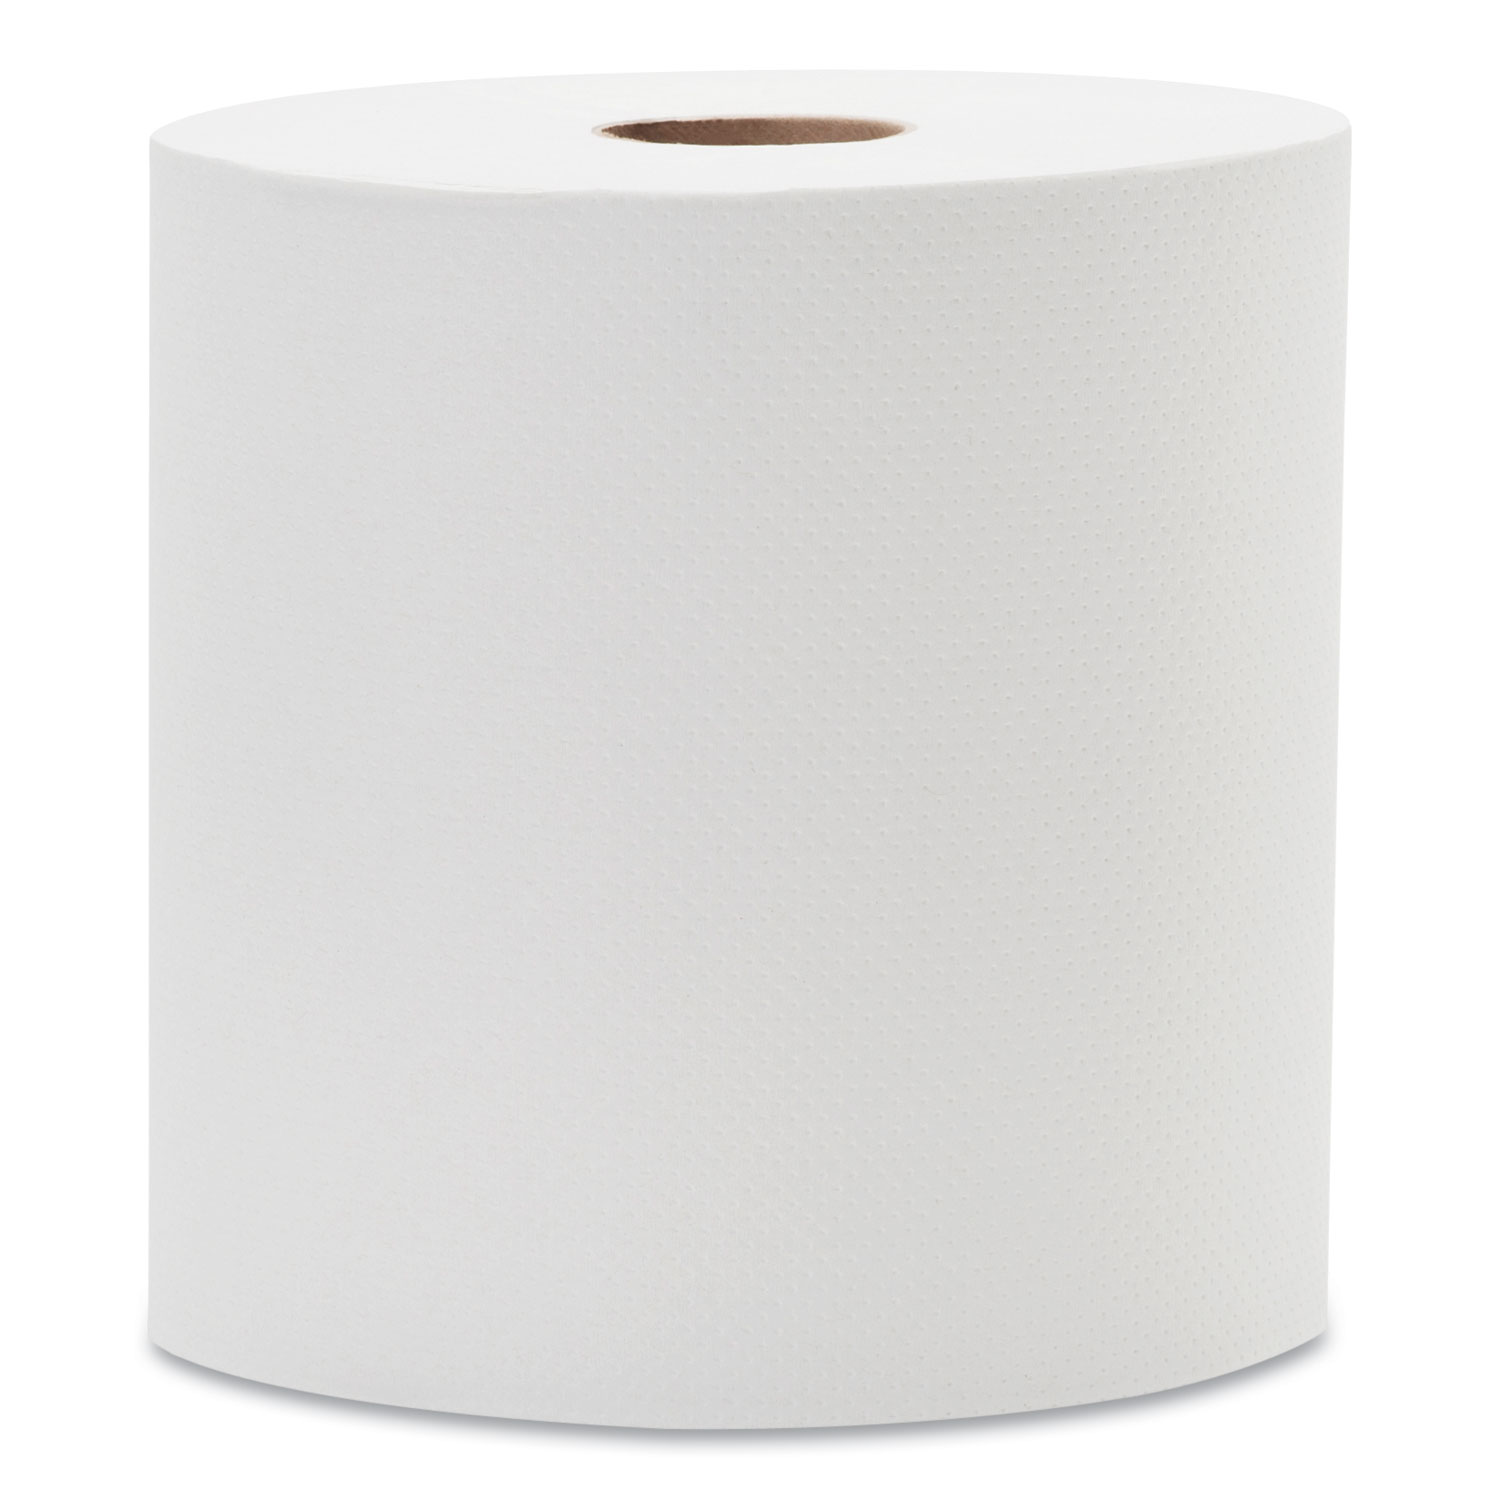  Resolute Tissue 325 800 Harmony Pro Towels, 8 x 800 ft, White, 6/Carton (APM325800) 